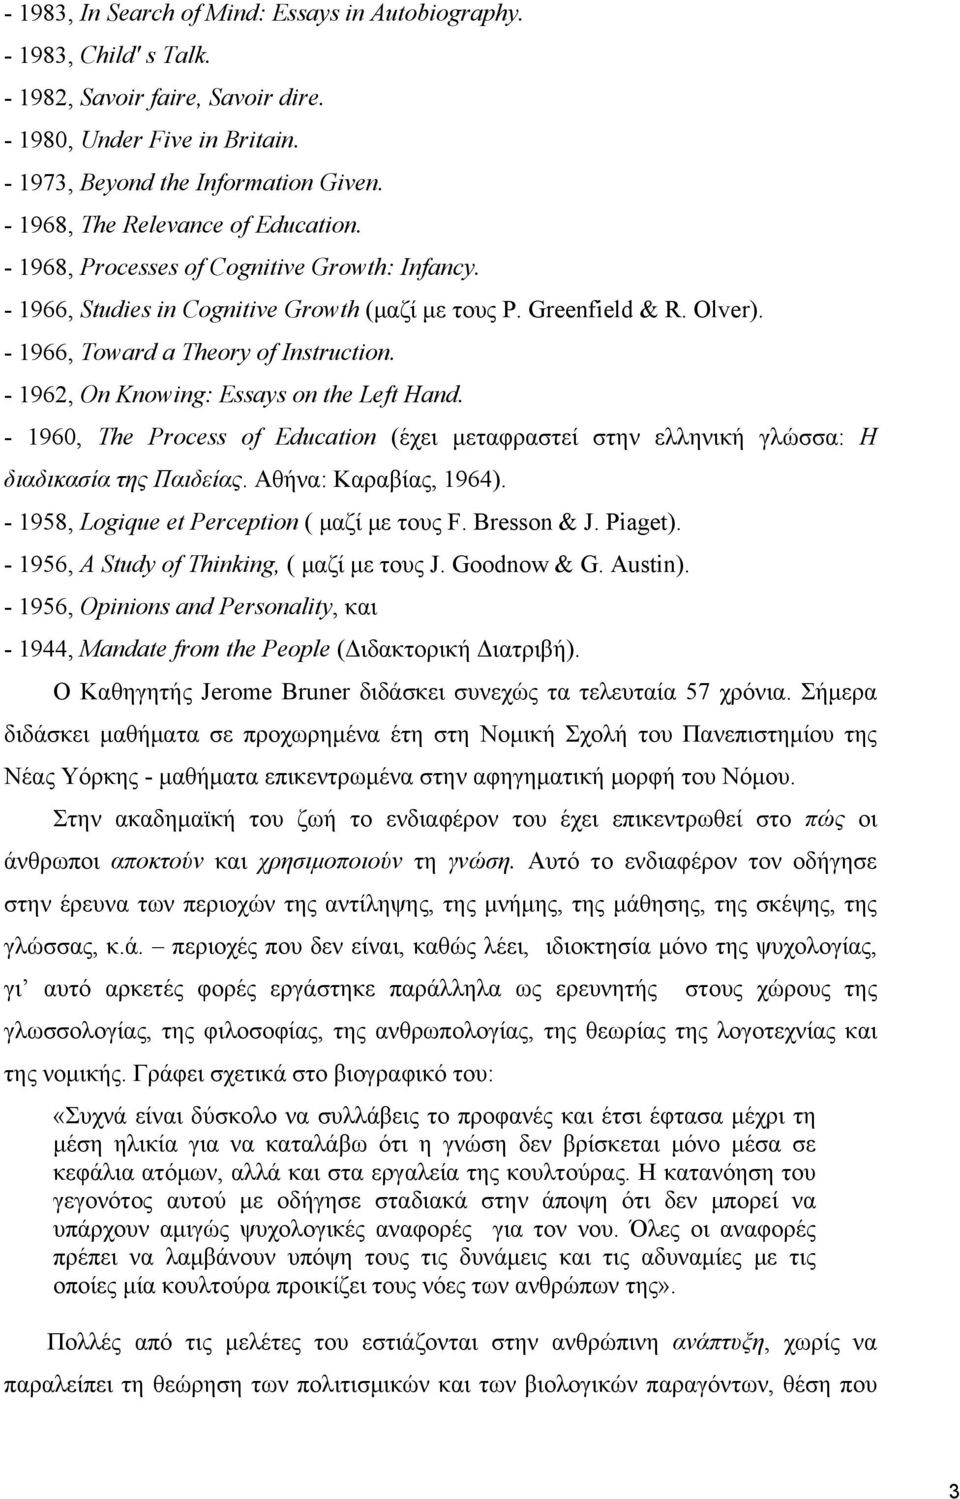 - 1962, On Knowing: Essays on the Left Hand. - 1960, The Process of Education (έχει μεταφραστεί στην ελληνική γλώσσα: Η διαδικασία της Παιδείας. Αθήνα: Καραβίας, 1964).